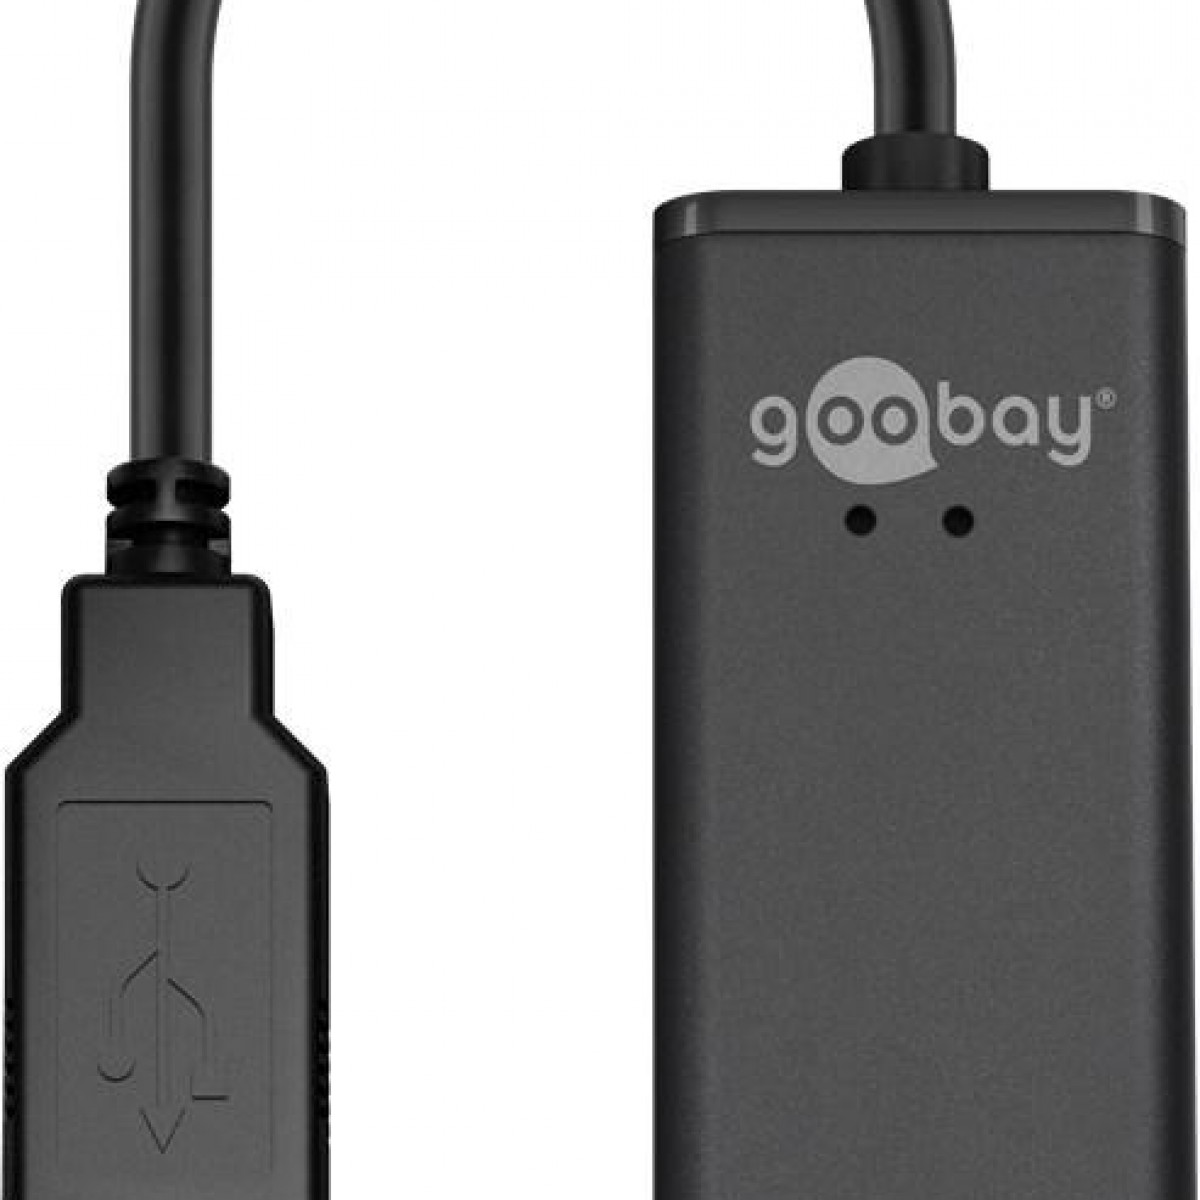 GOOBAY USB Fast Netzwerkkonverter Netzwerkkonverter 2.0 Ethernet